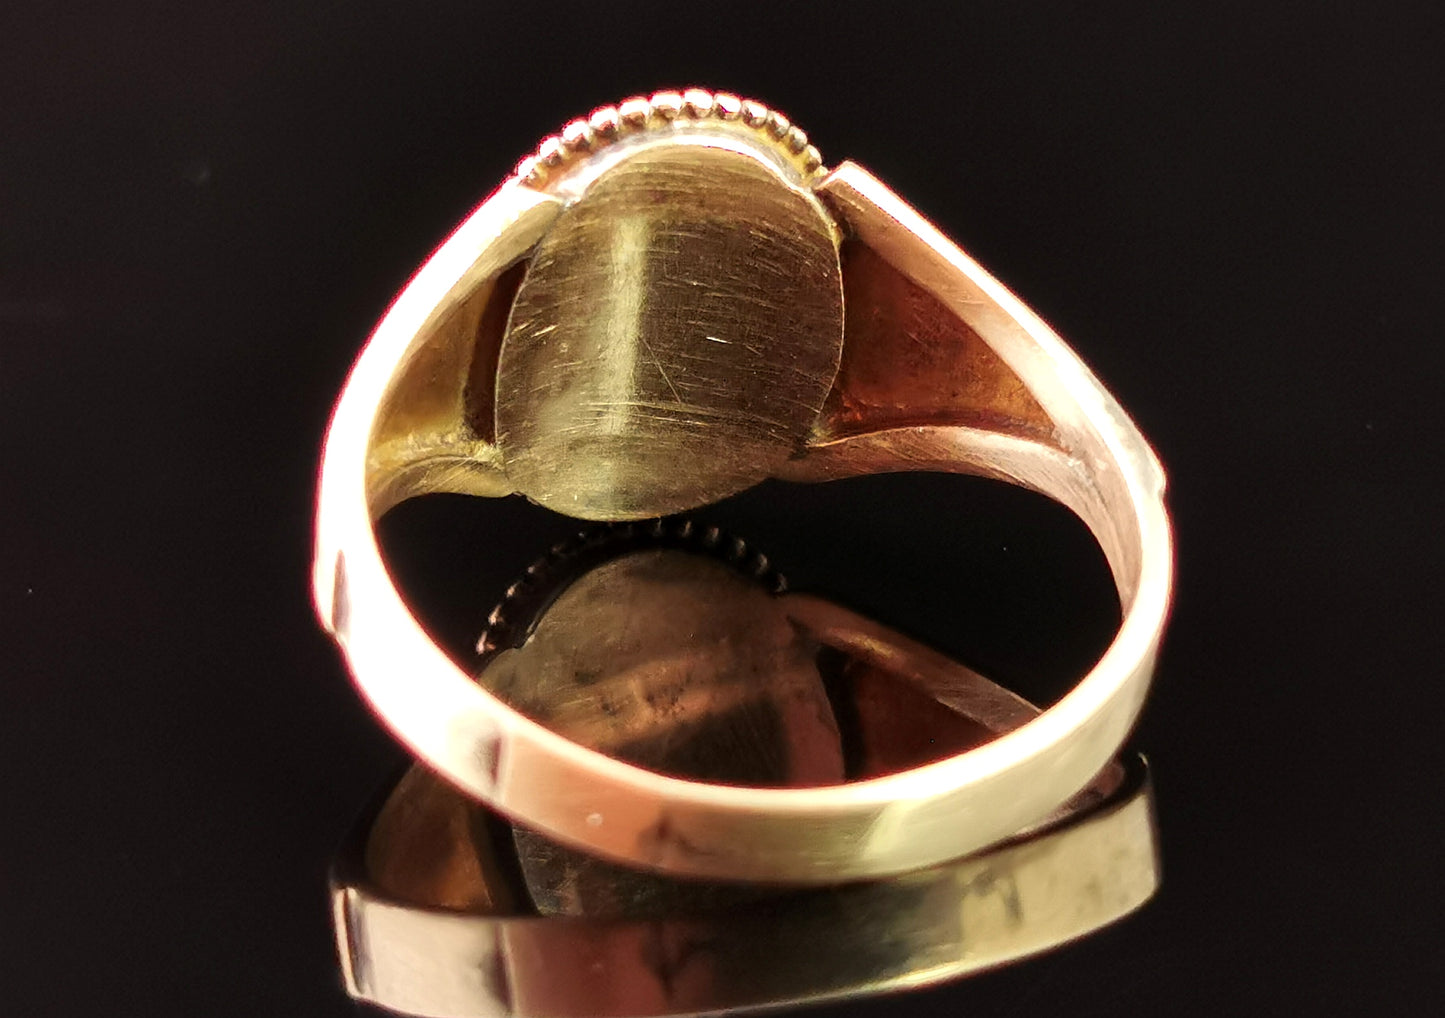 Antique mourning ring, 9ct engraved gold, hairwork